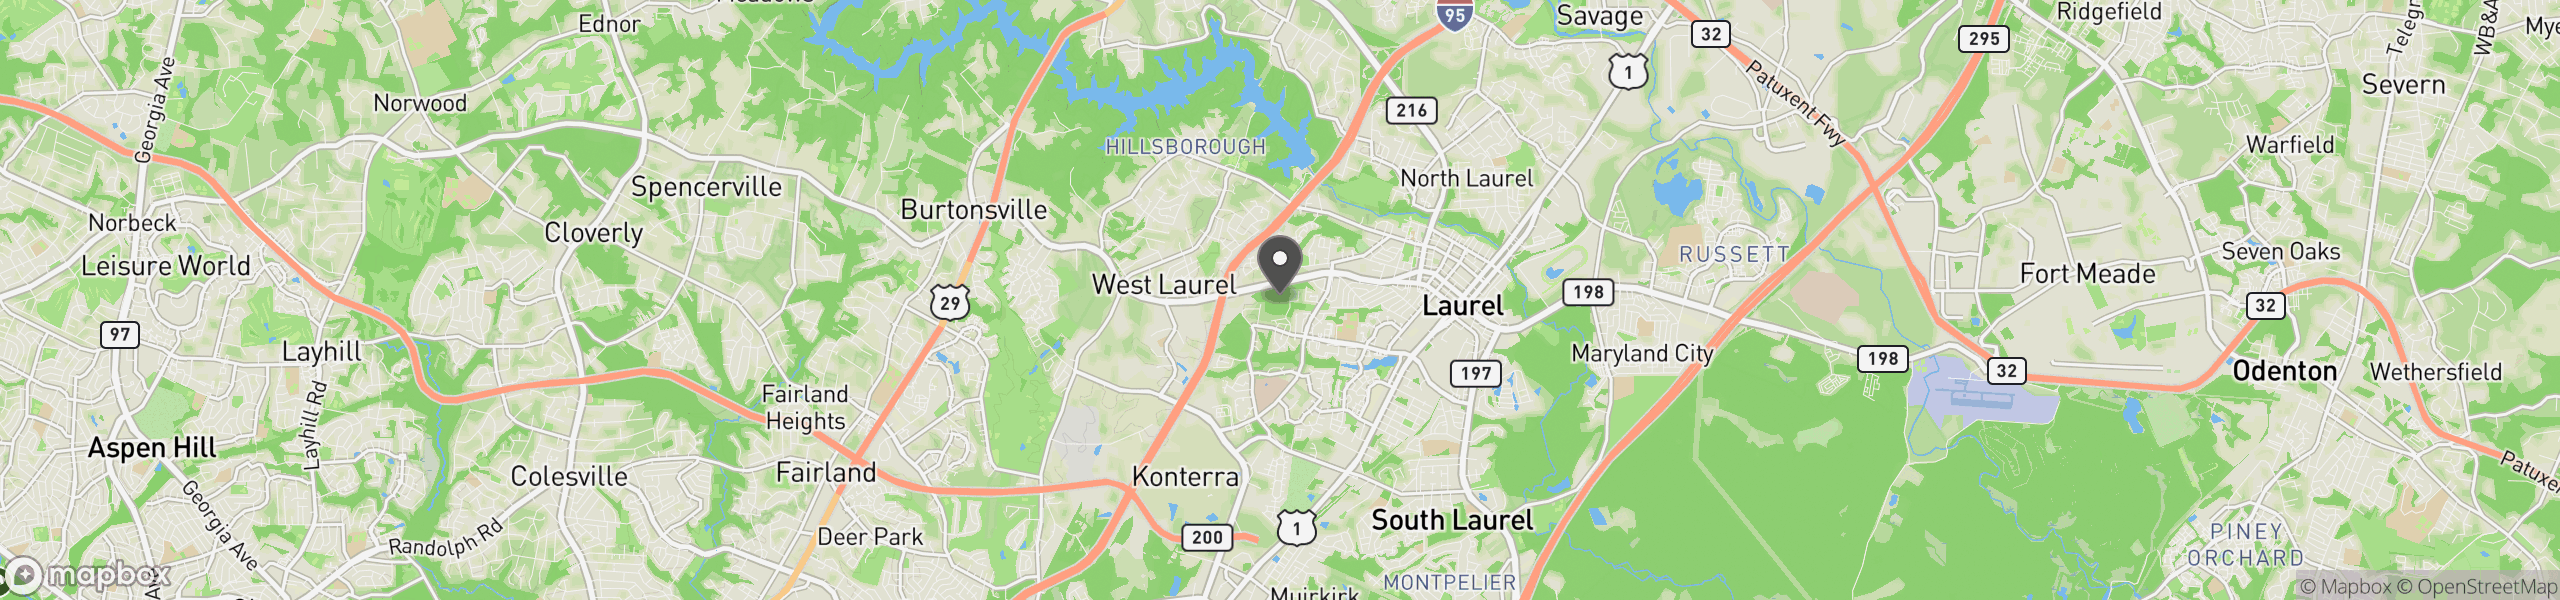 Laurel, MD 20707